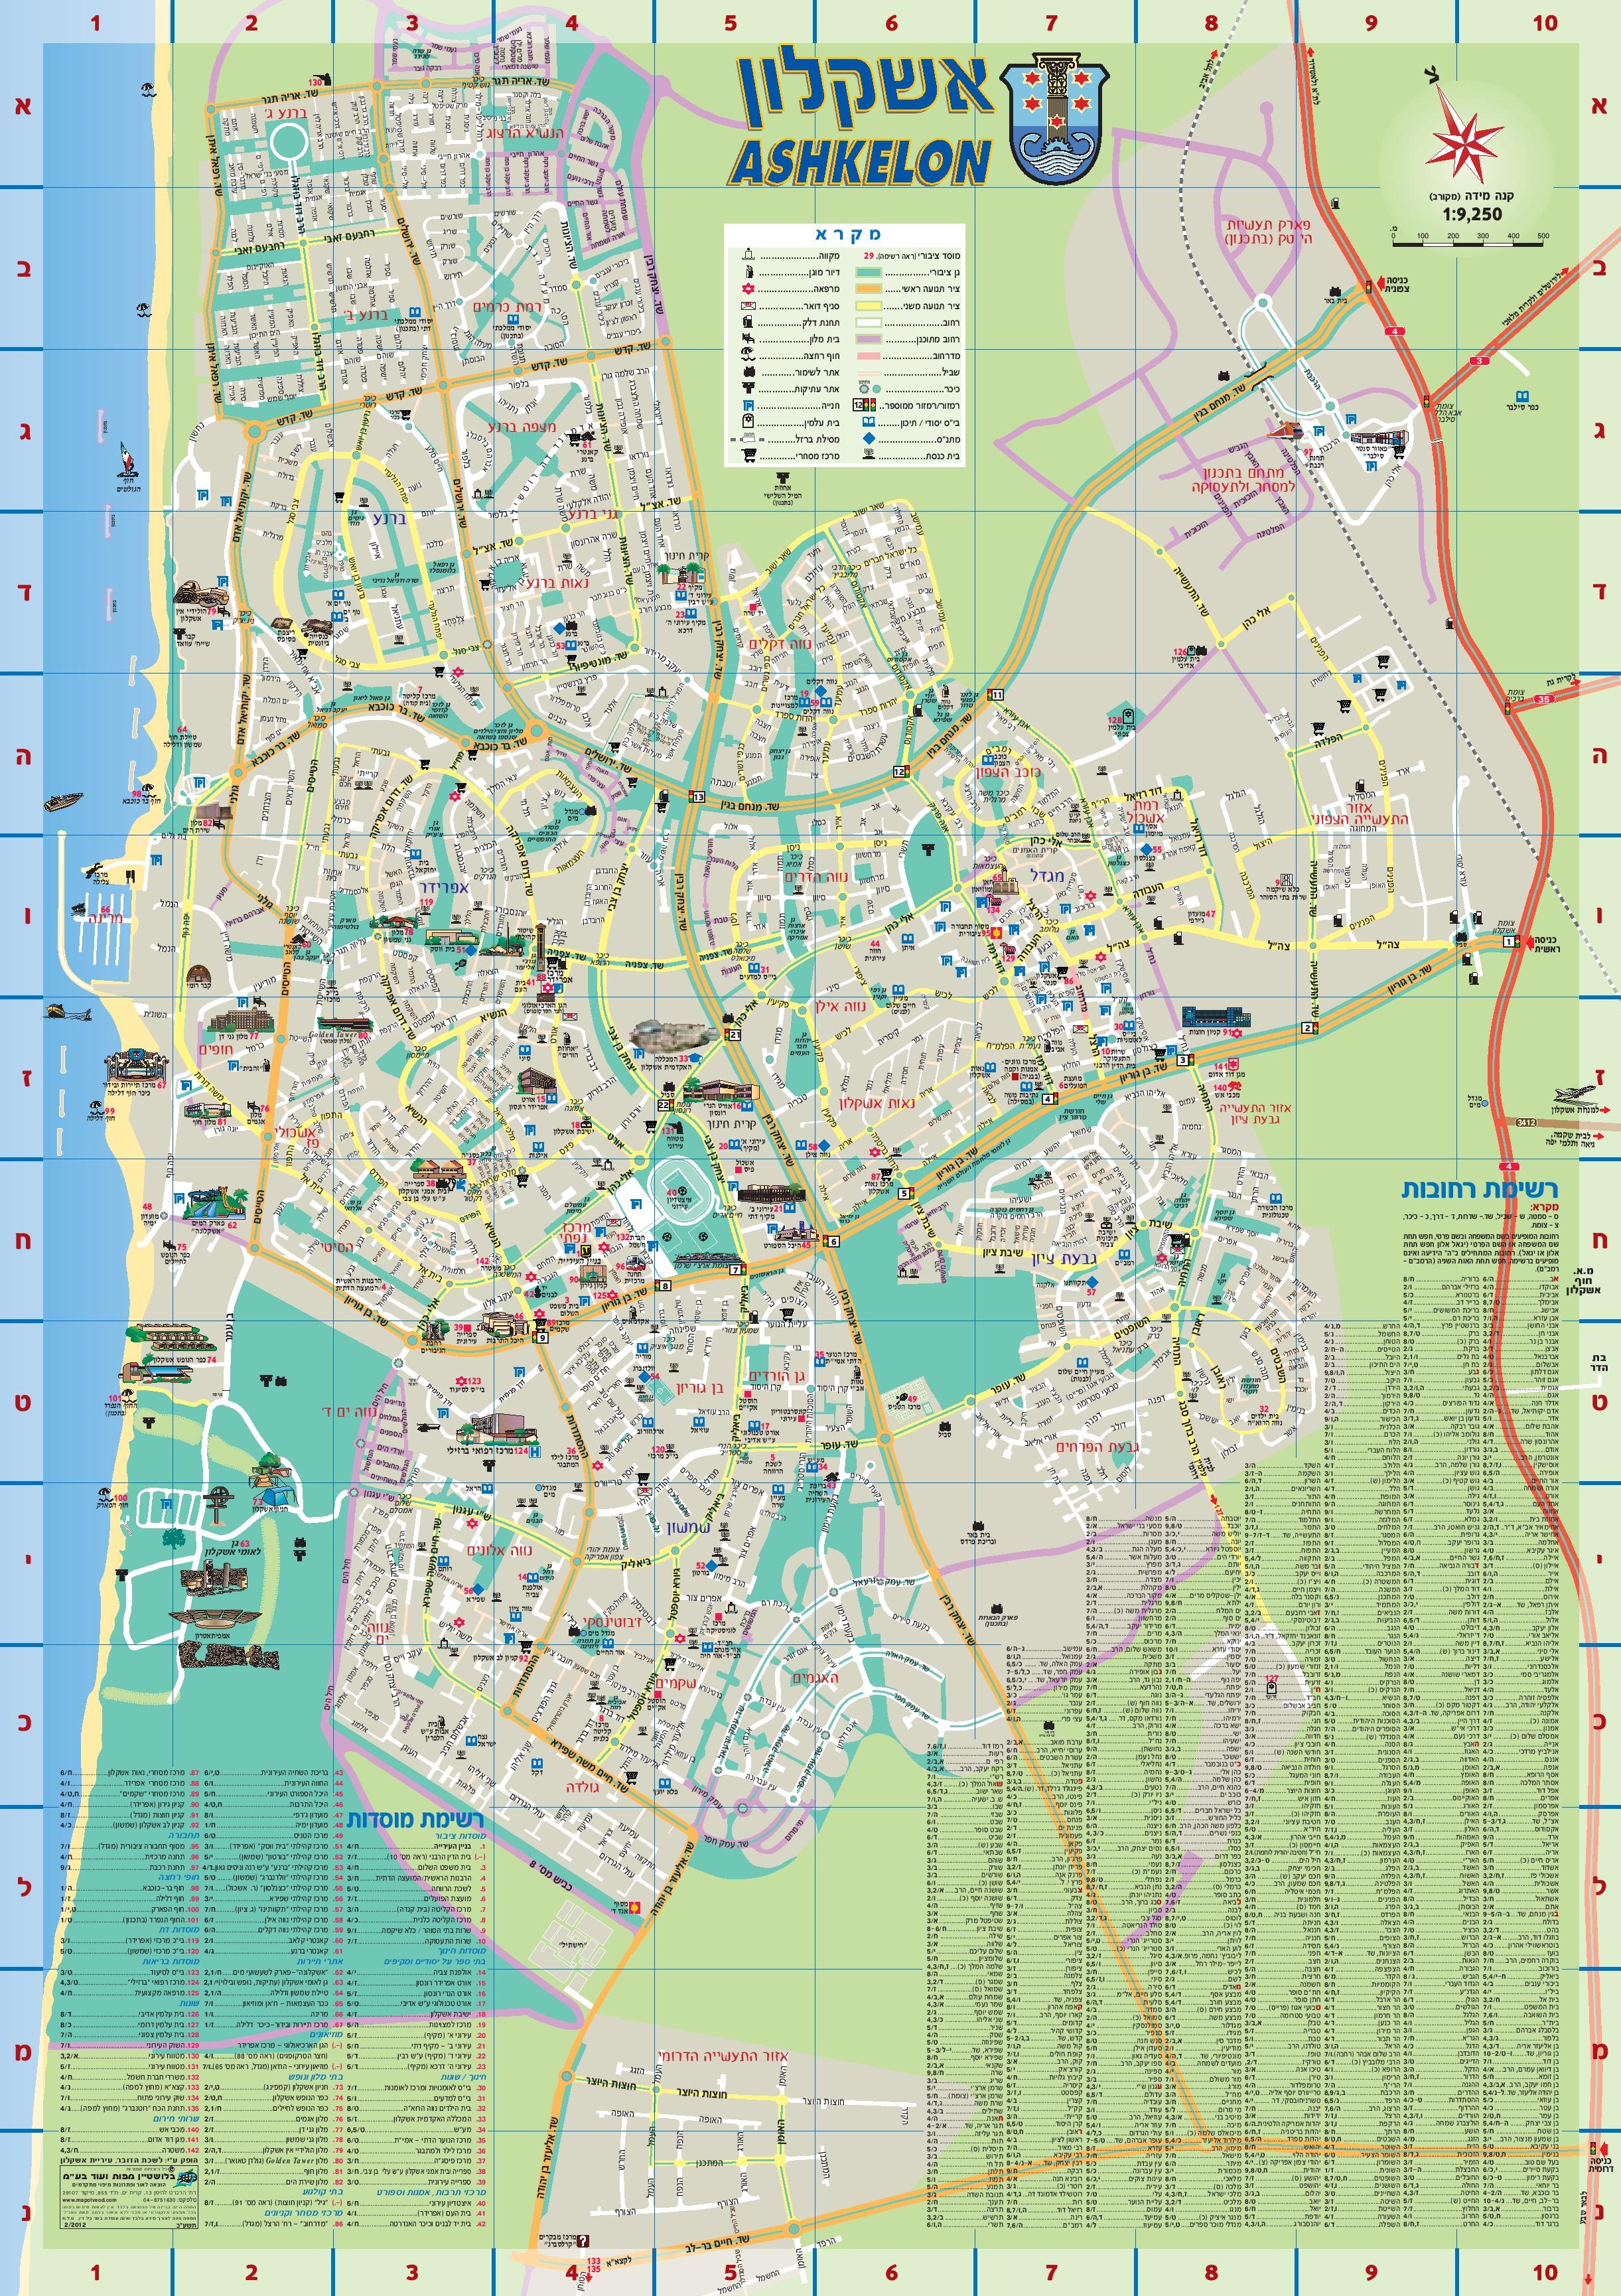 Ashkelon tourist map2443 x 3460